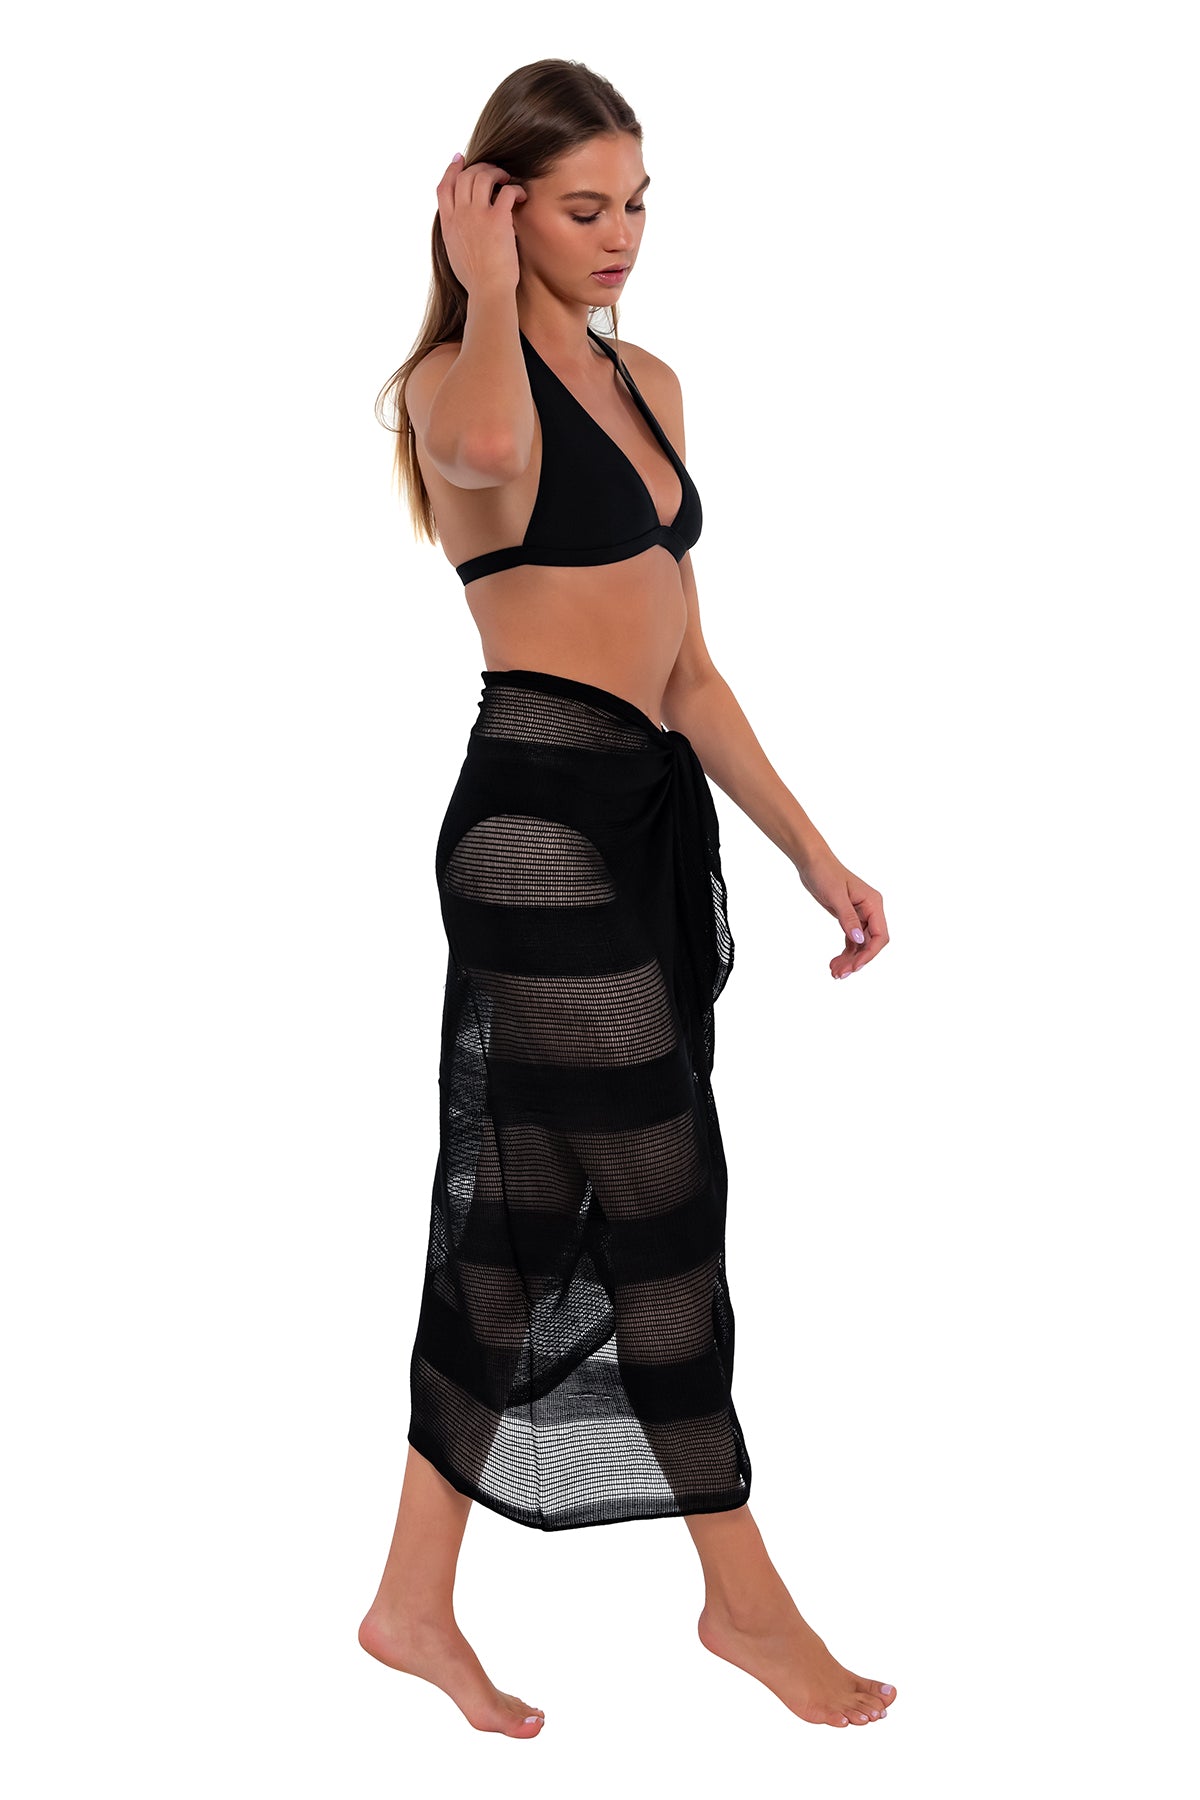 Side pose #1 of Daria wearing Sunsets Black Paradise Pareo with matching Faith Halter bikini top